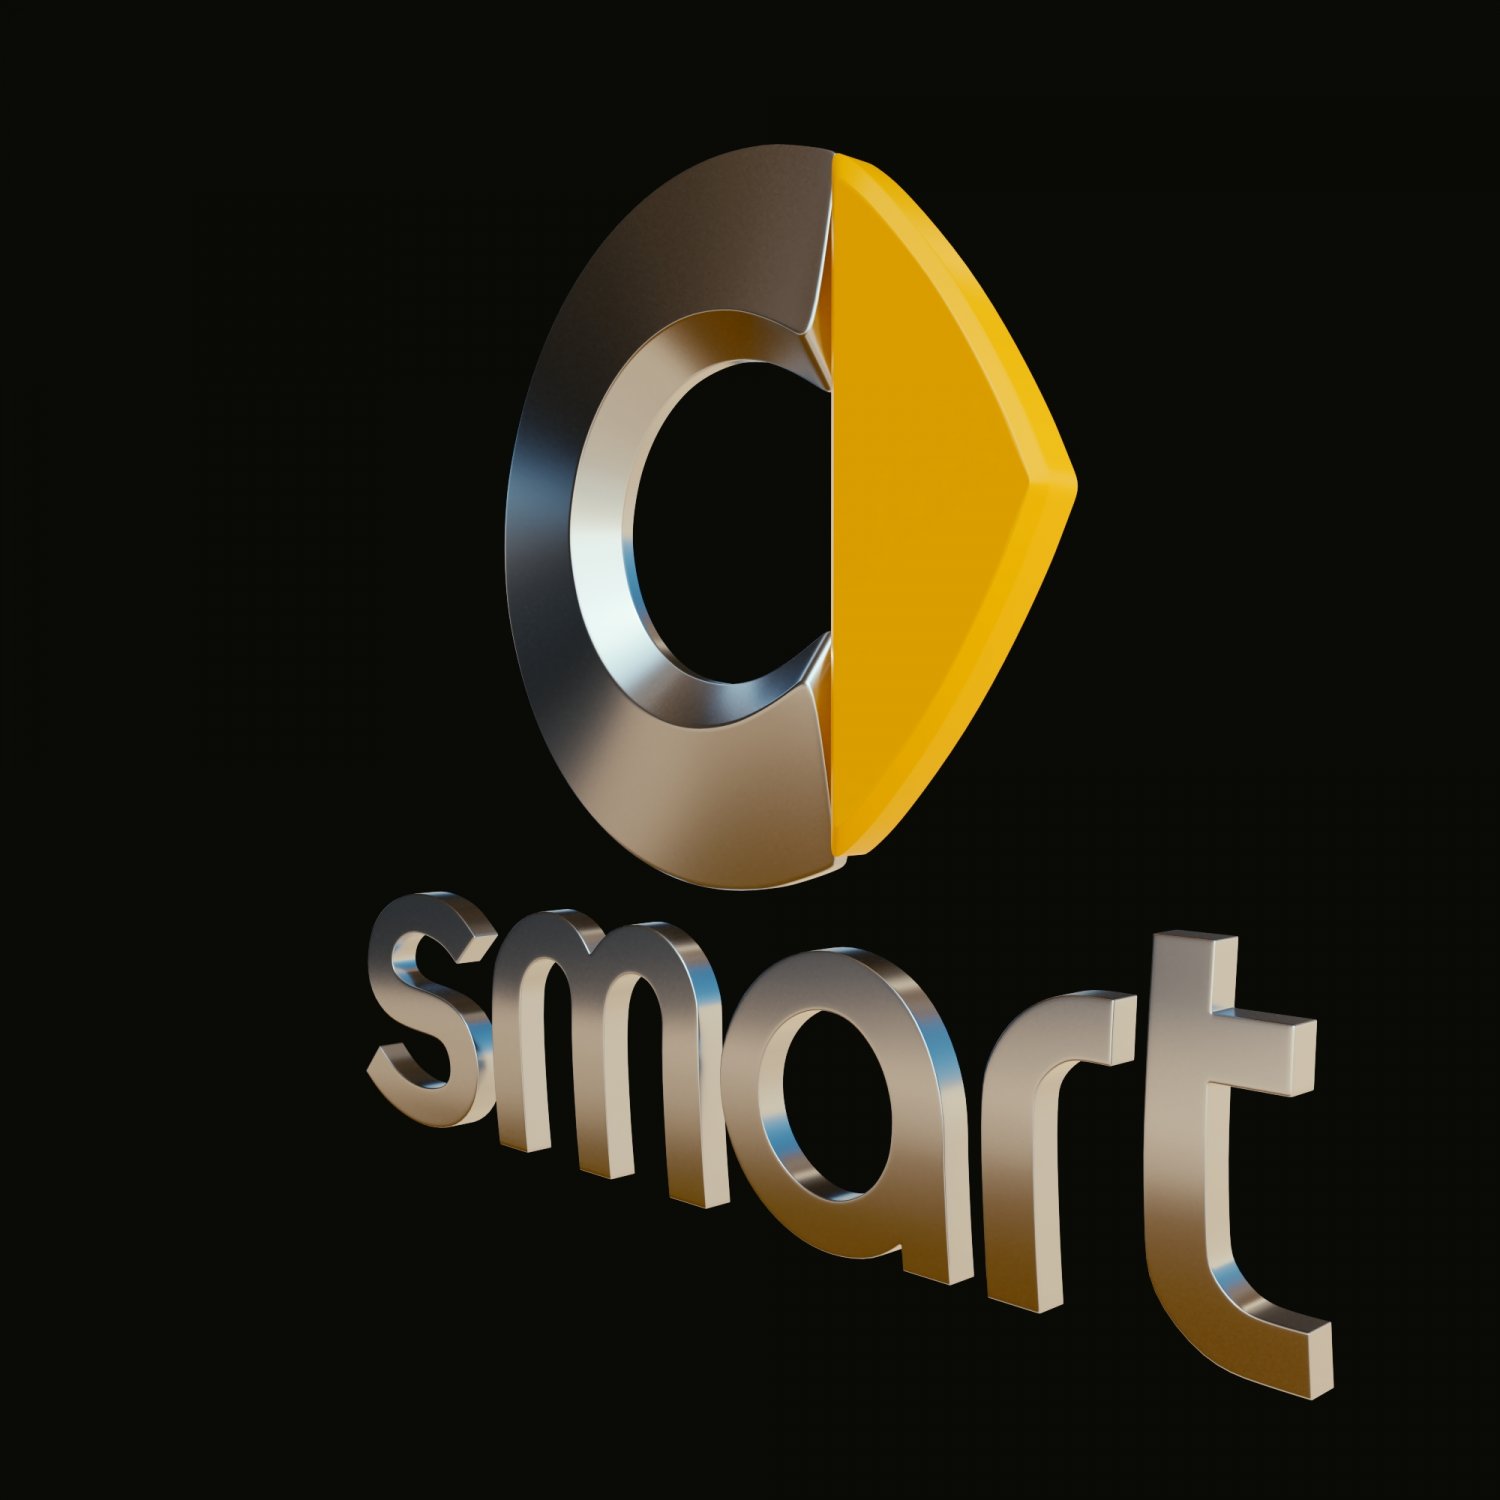 smart logo 3D-Modell in Autoteile 3DExport